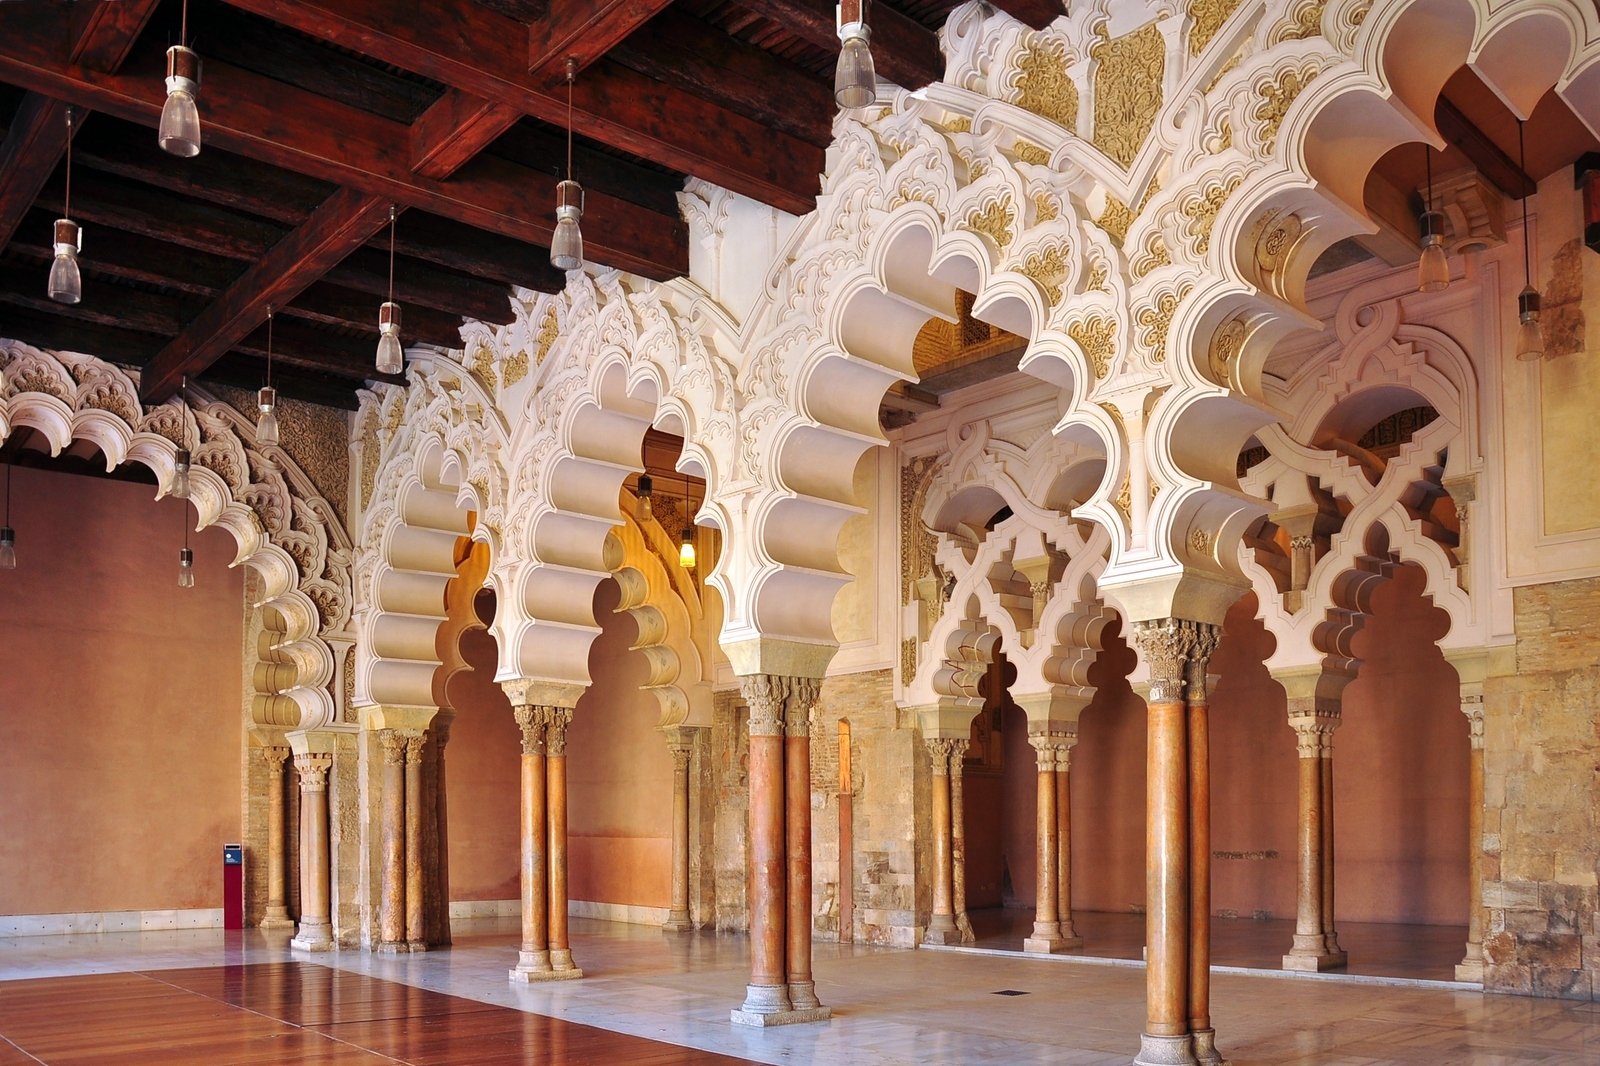 Оформление сводов. Мудехар в архитектуре Испании. Марокко мавританские арки архитектура. Арабская Испания стиль мудехар. Мавританский стиль мудехар.